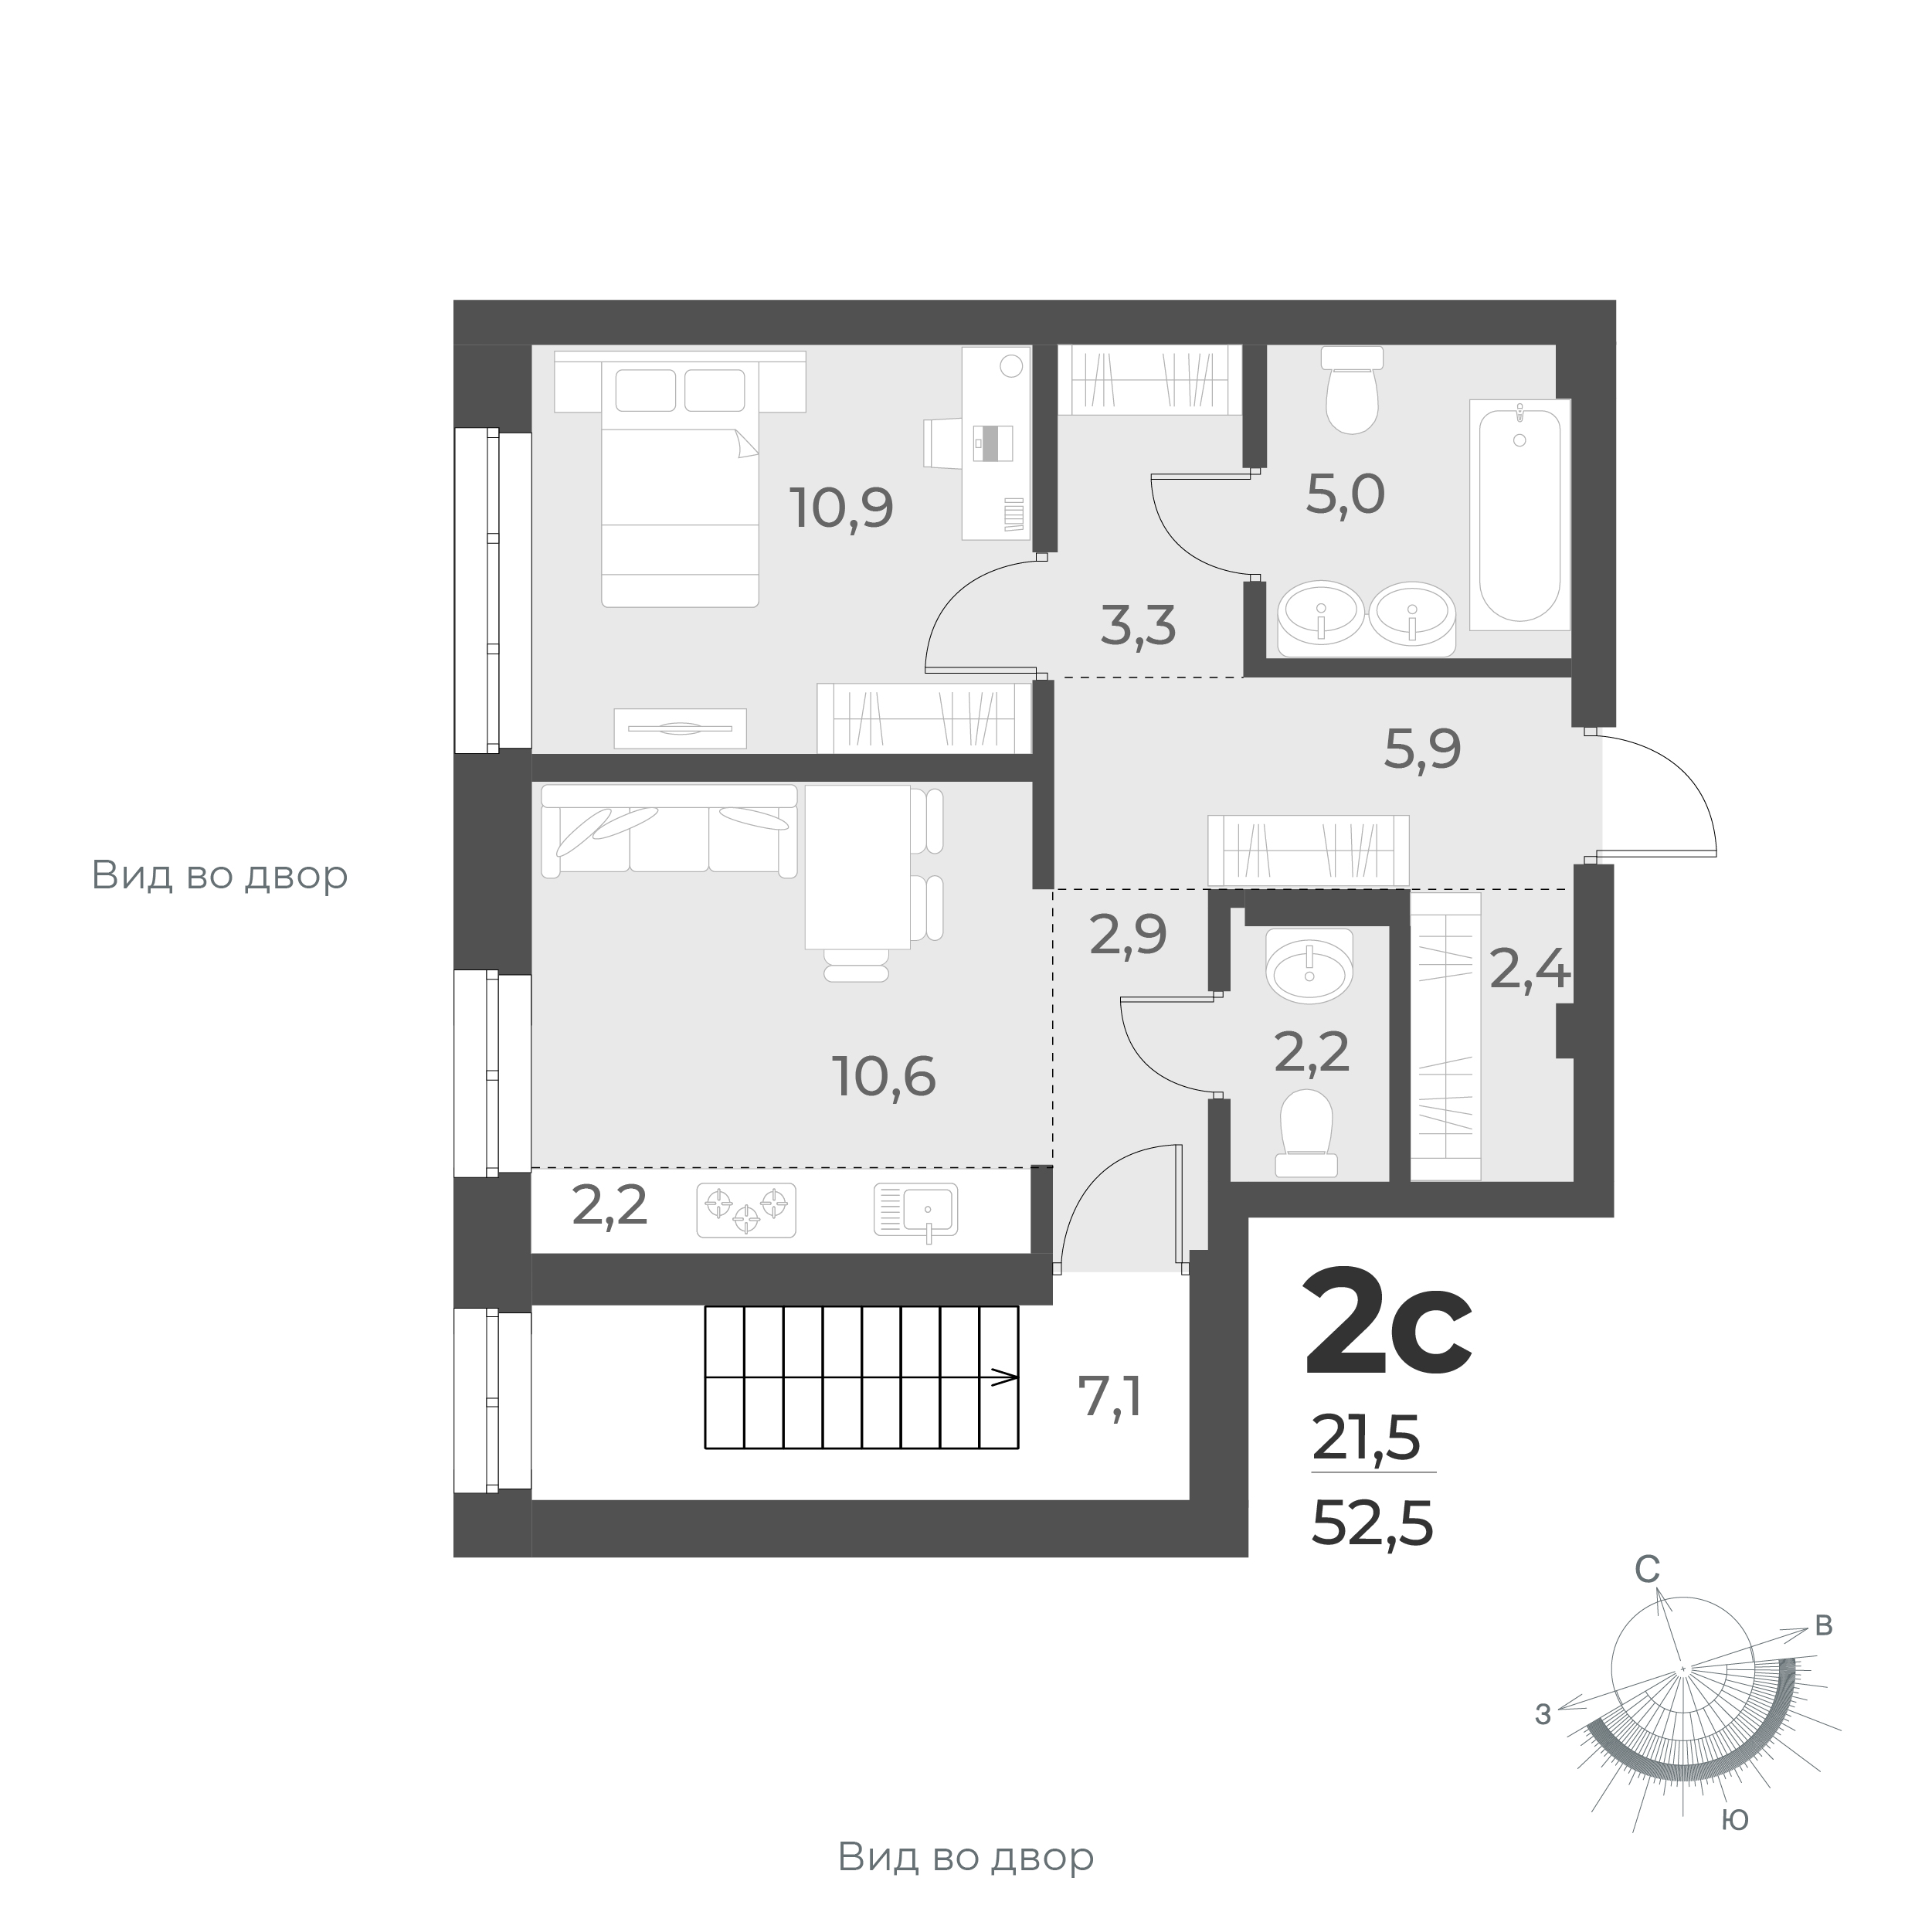 2-комнатная квартира 52.5м2 ЖК Новелла